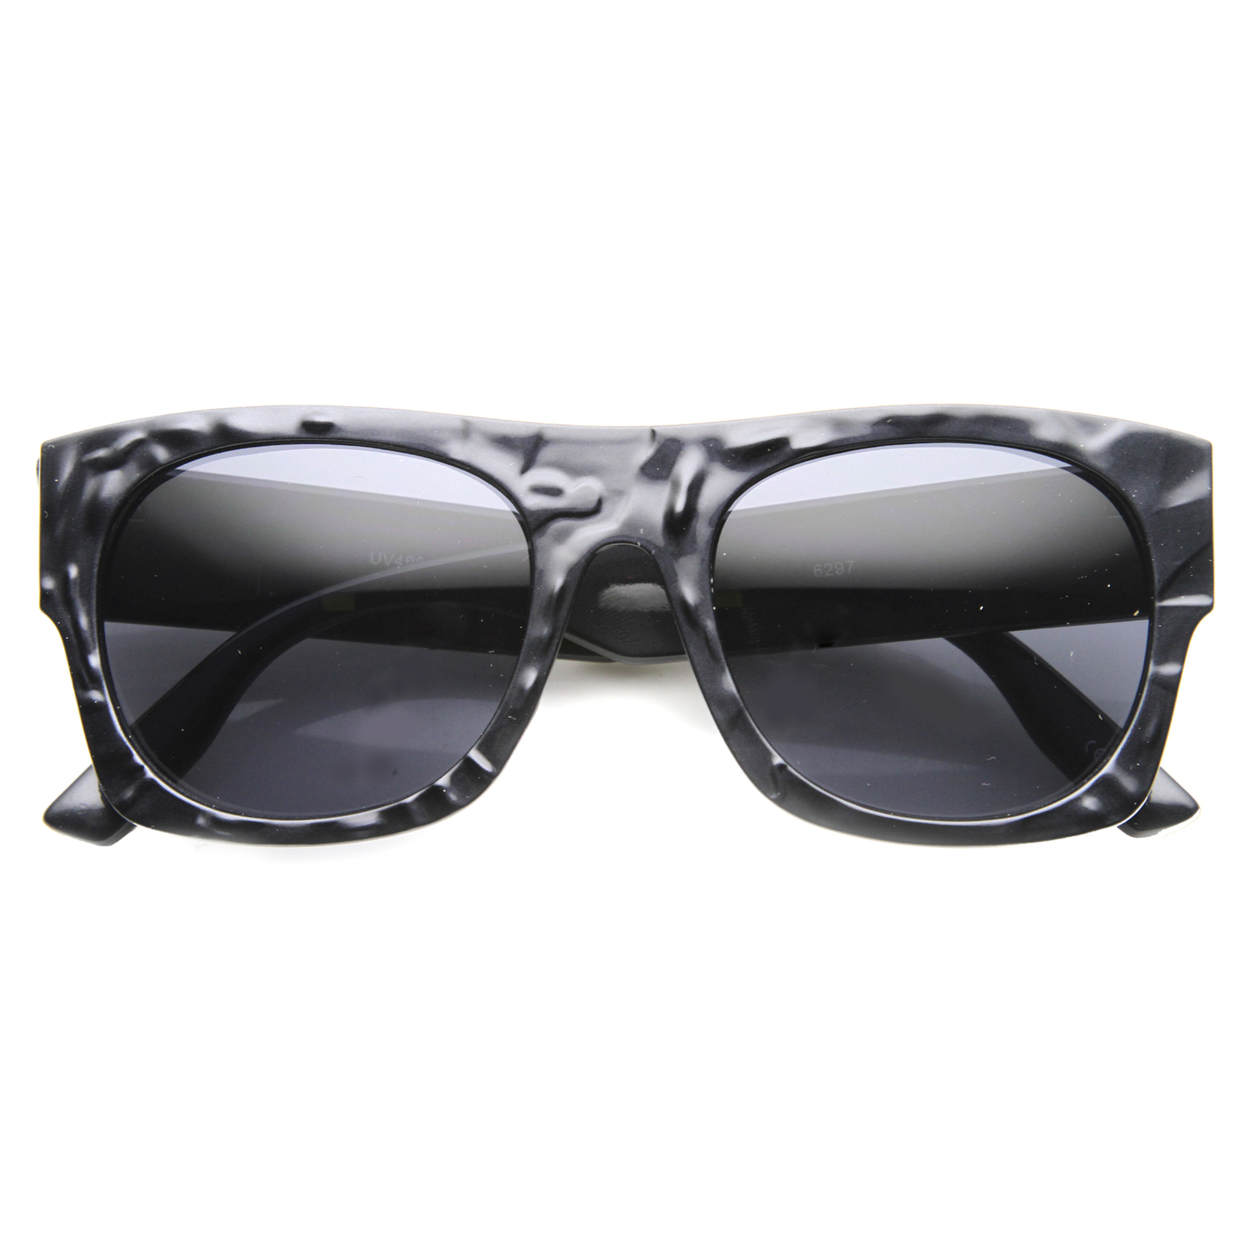 Unisex Rectangular Sunglasses With UV400 Protected Composite Lens 9865 - Shiny Black / Lavender